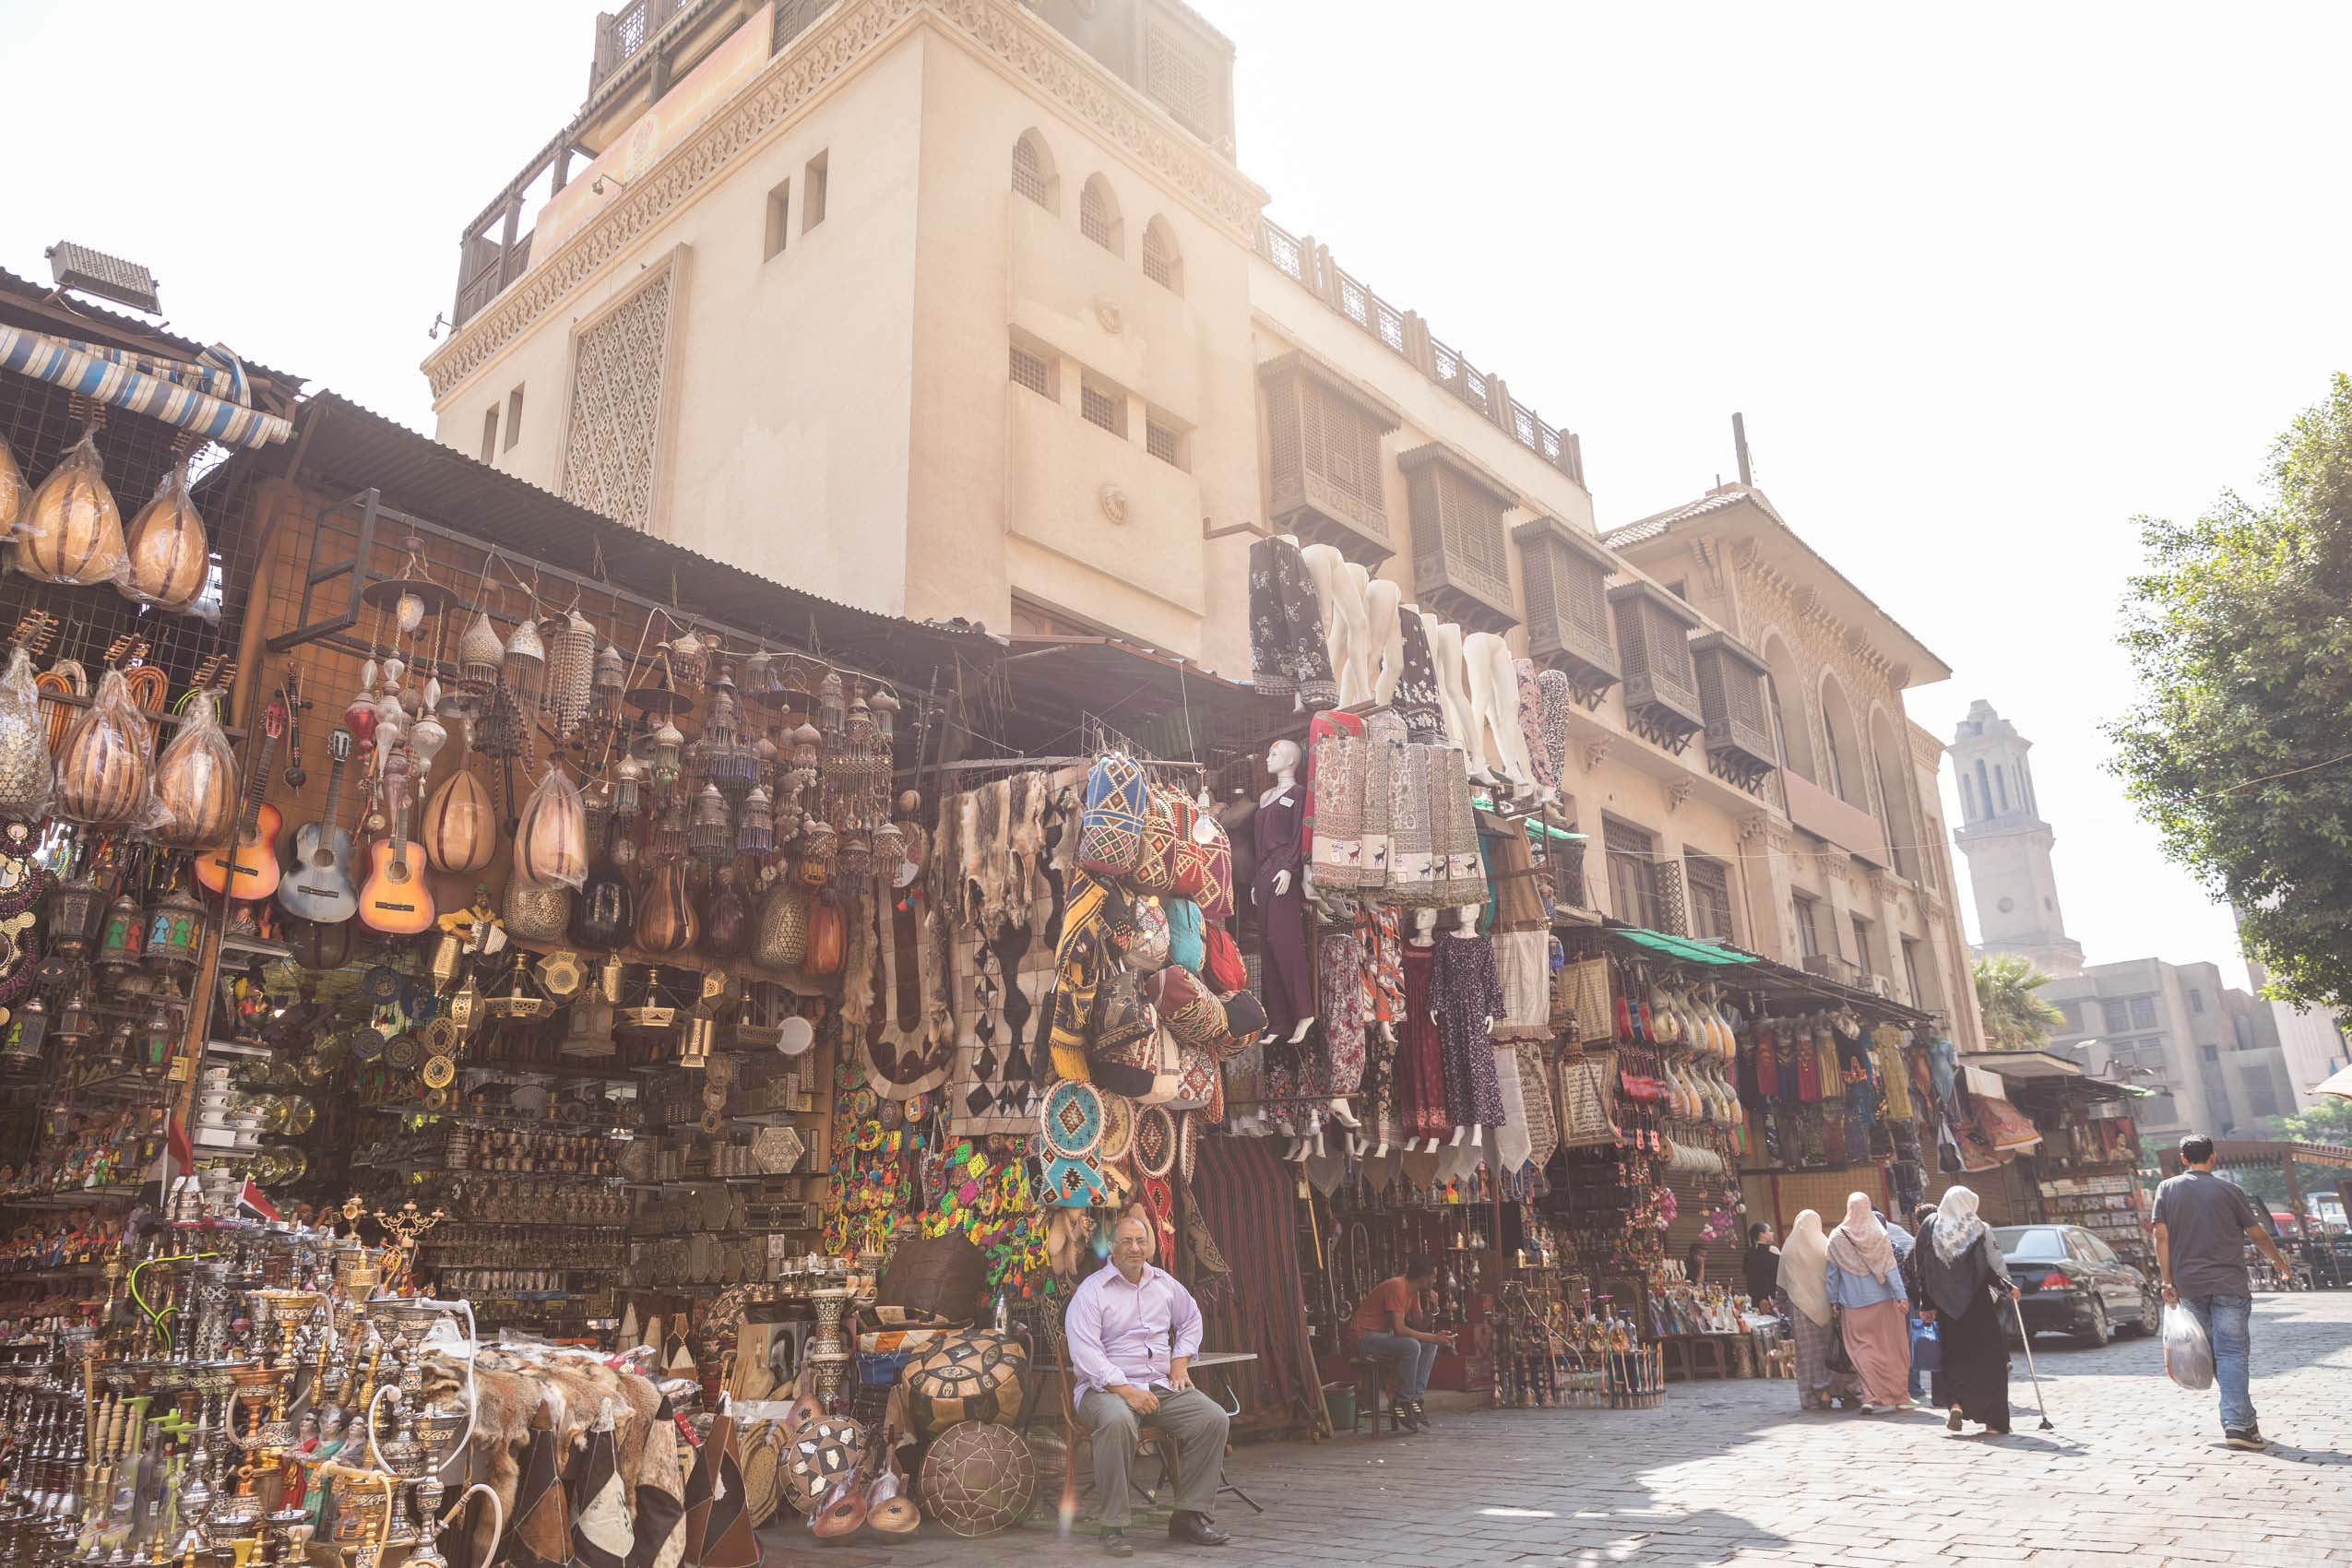 Cairo Egypt city market